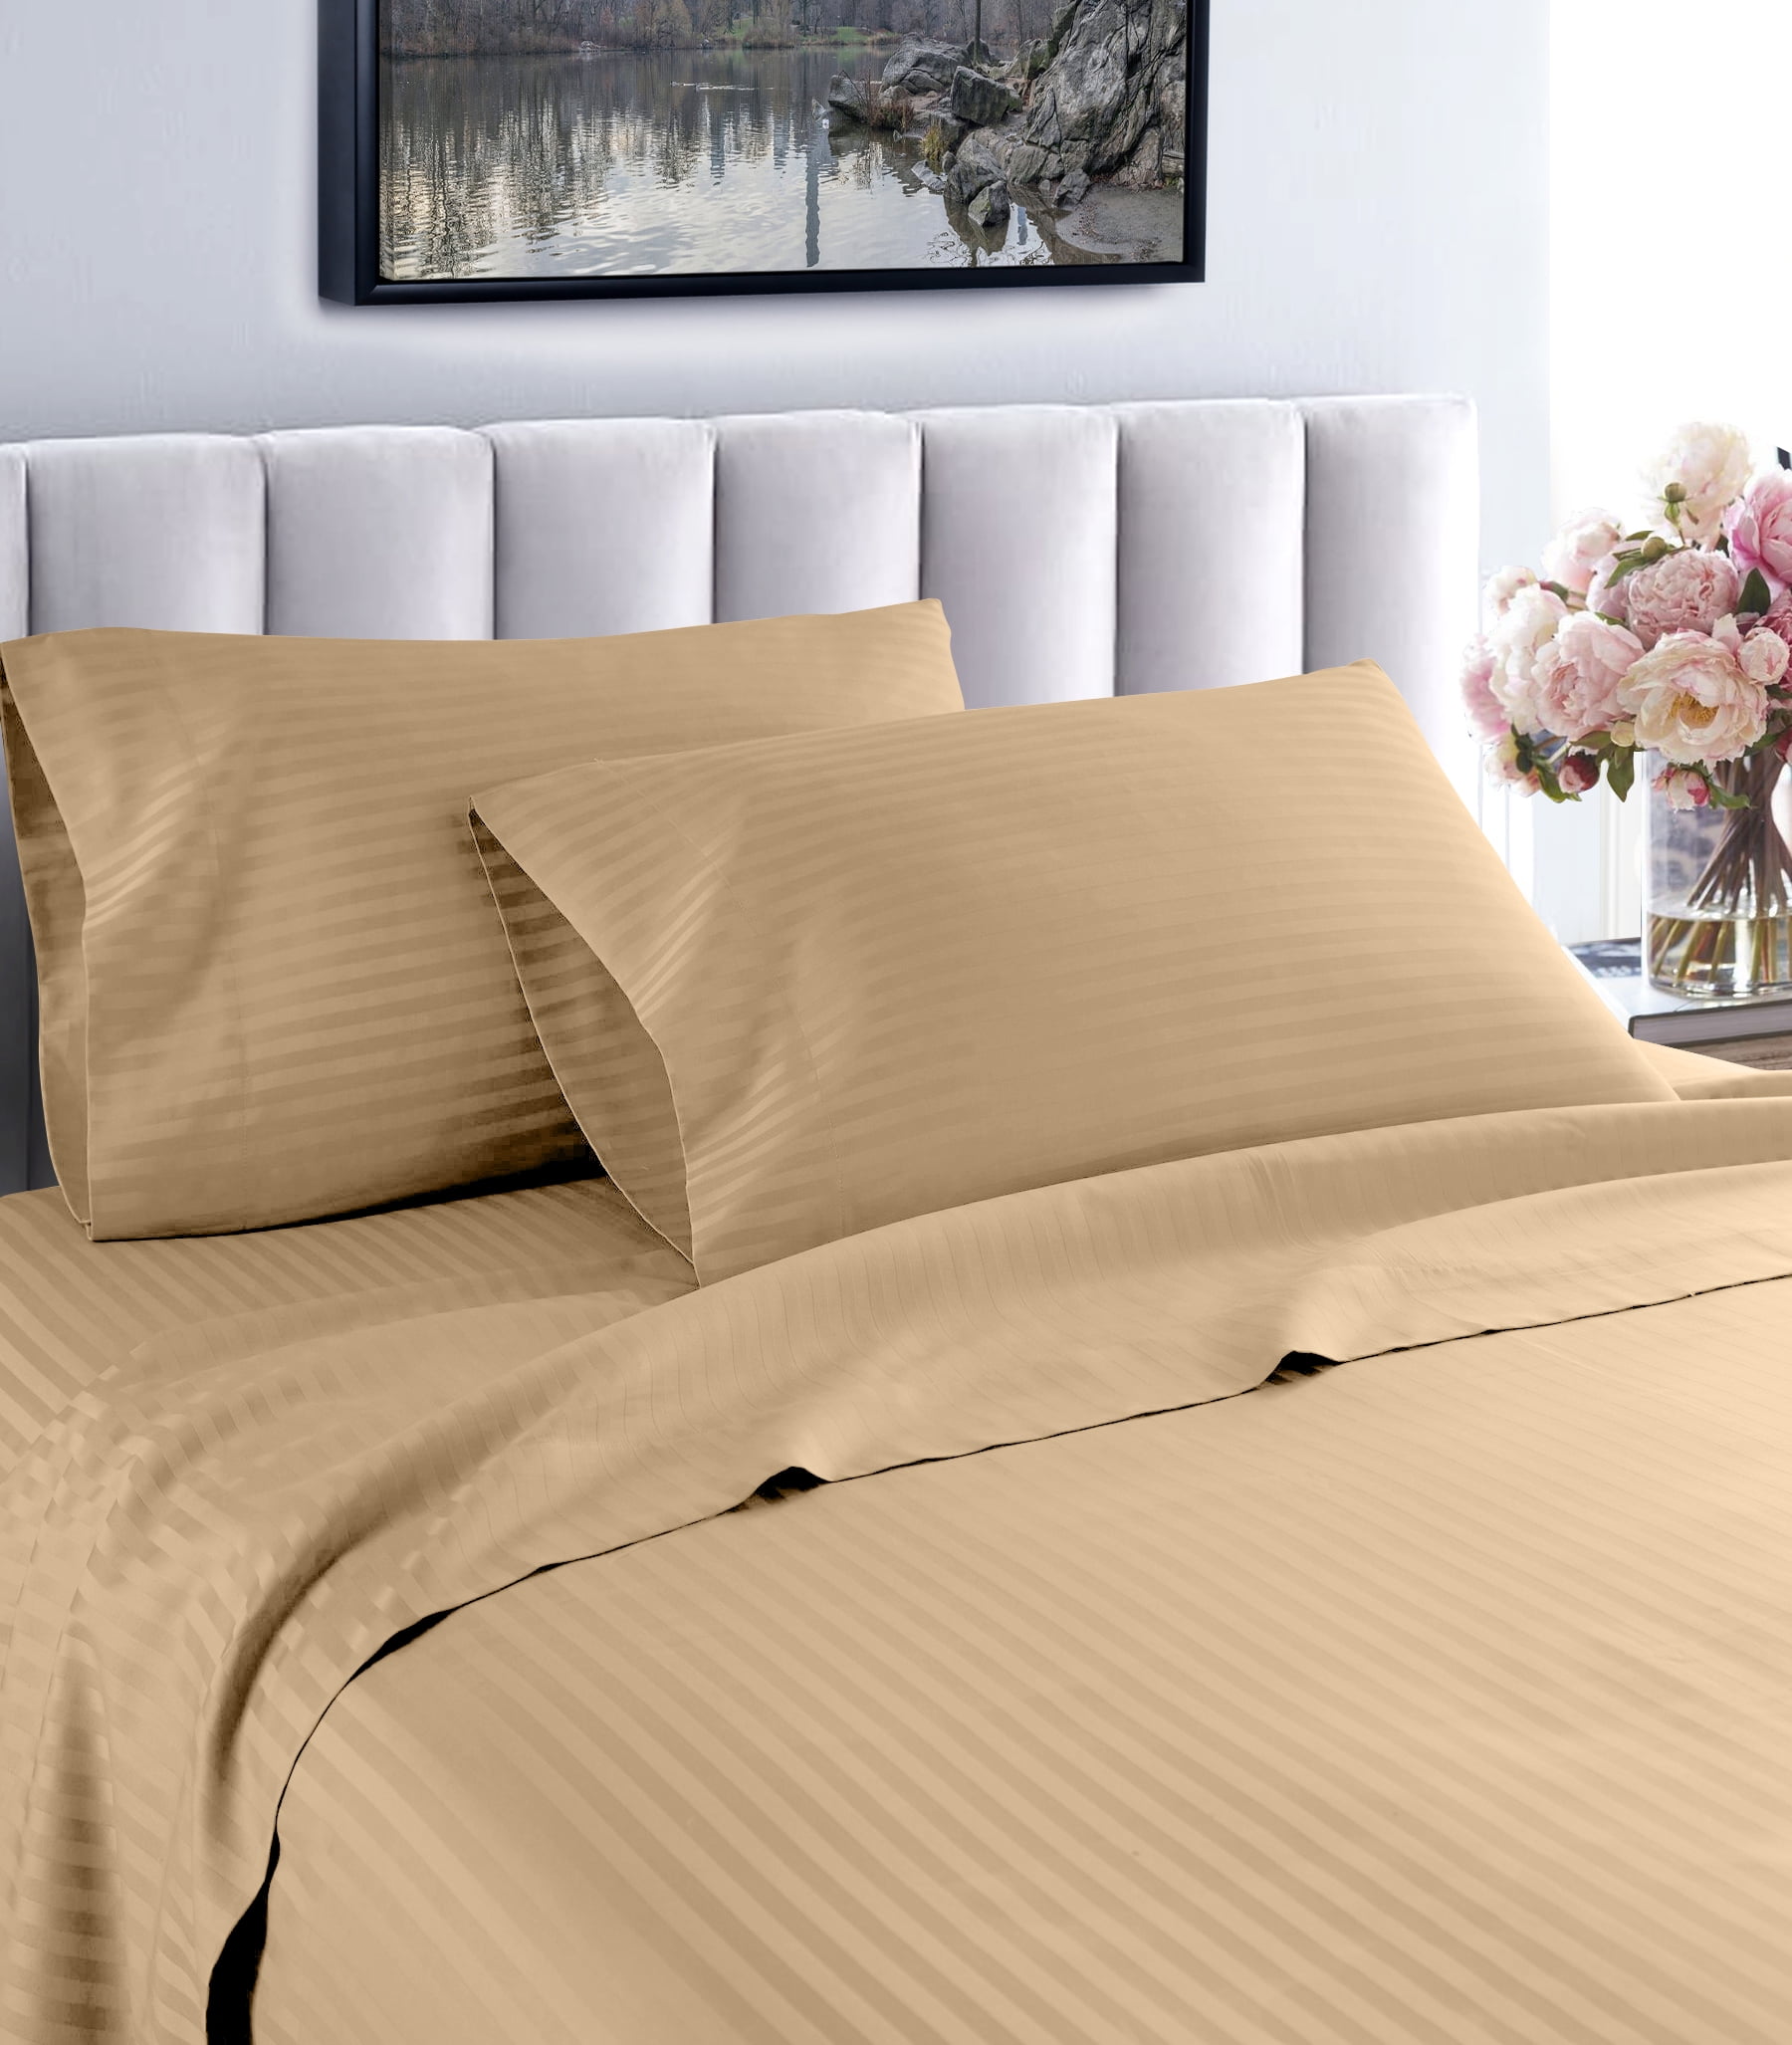 100% Cotton Sheet Set Fitted/Flat Sheet Pillowcases Pair 144 Threads Bedsheets